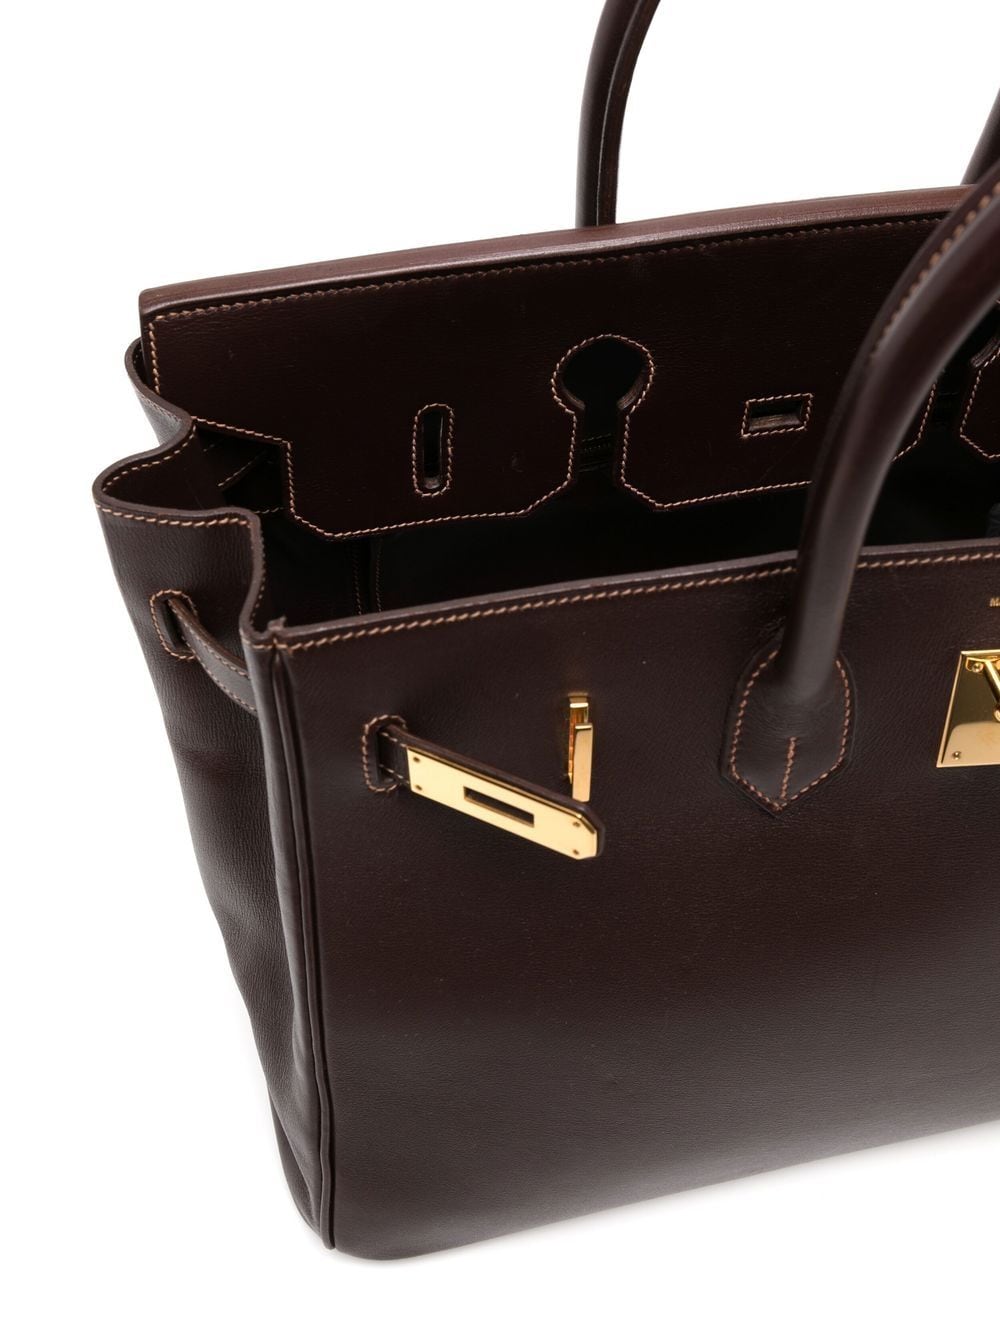 Hermès 2019 pre-owned Birkin 35 Handbag - Farfetch